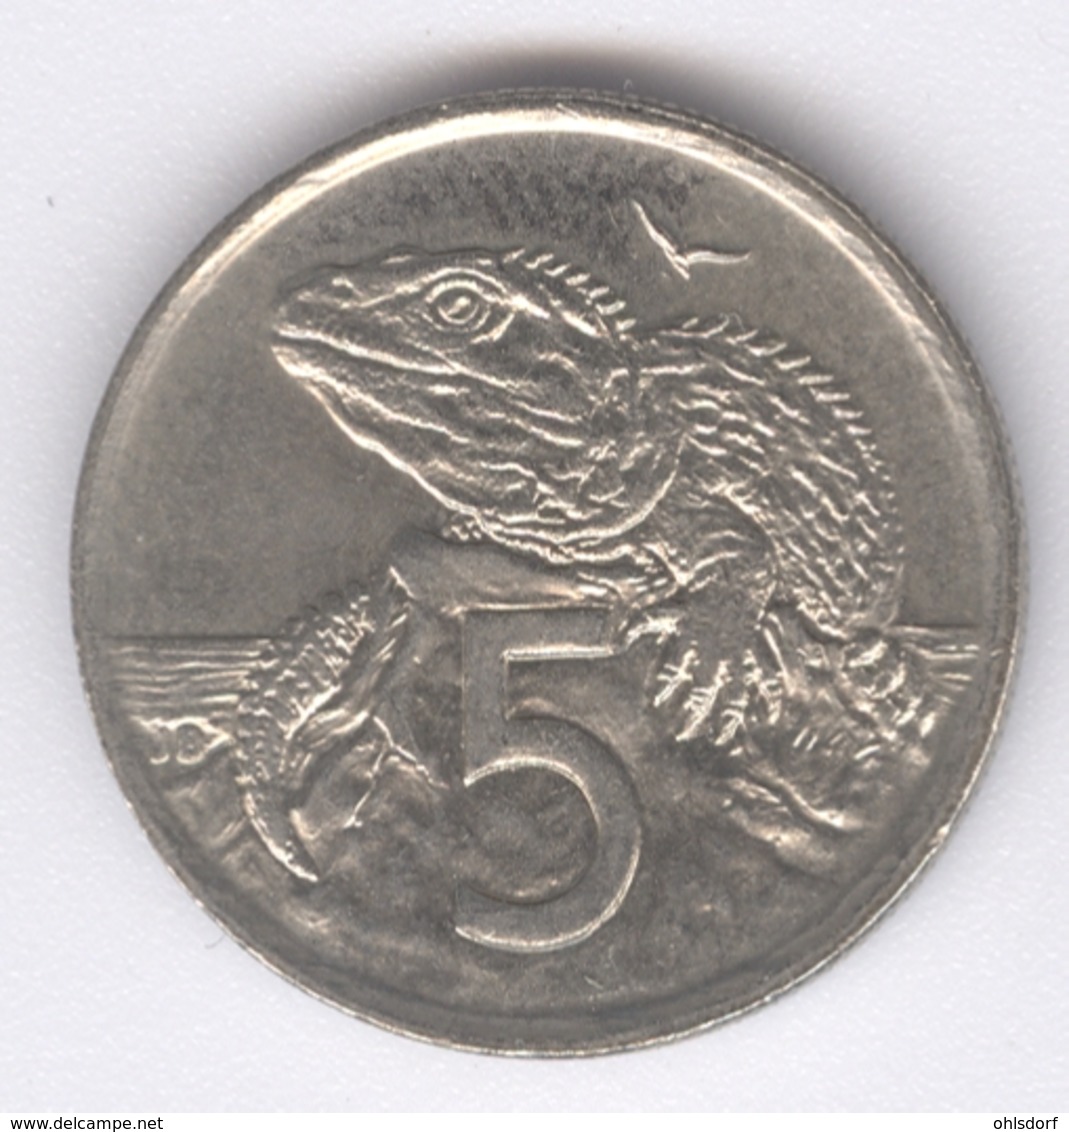 NEW ZEALAND 1994: 5 Cents, KM 60 - New Zealand